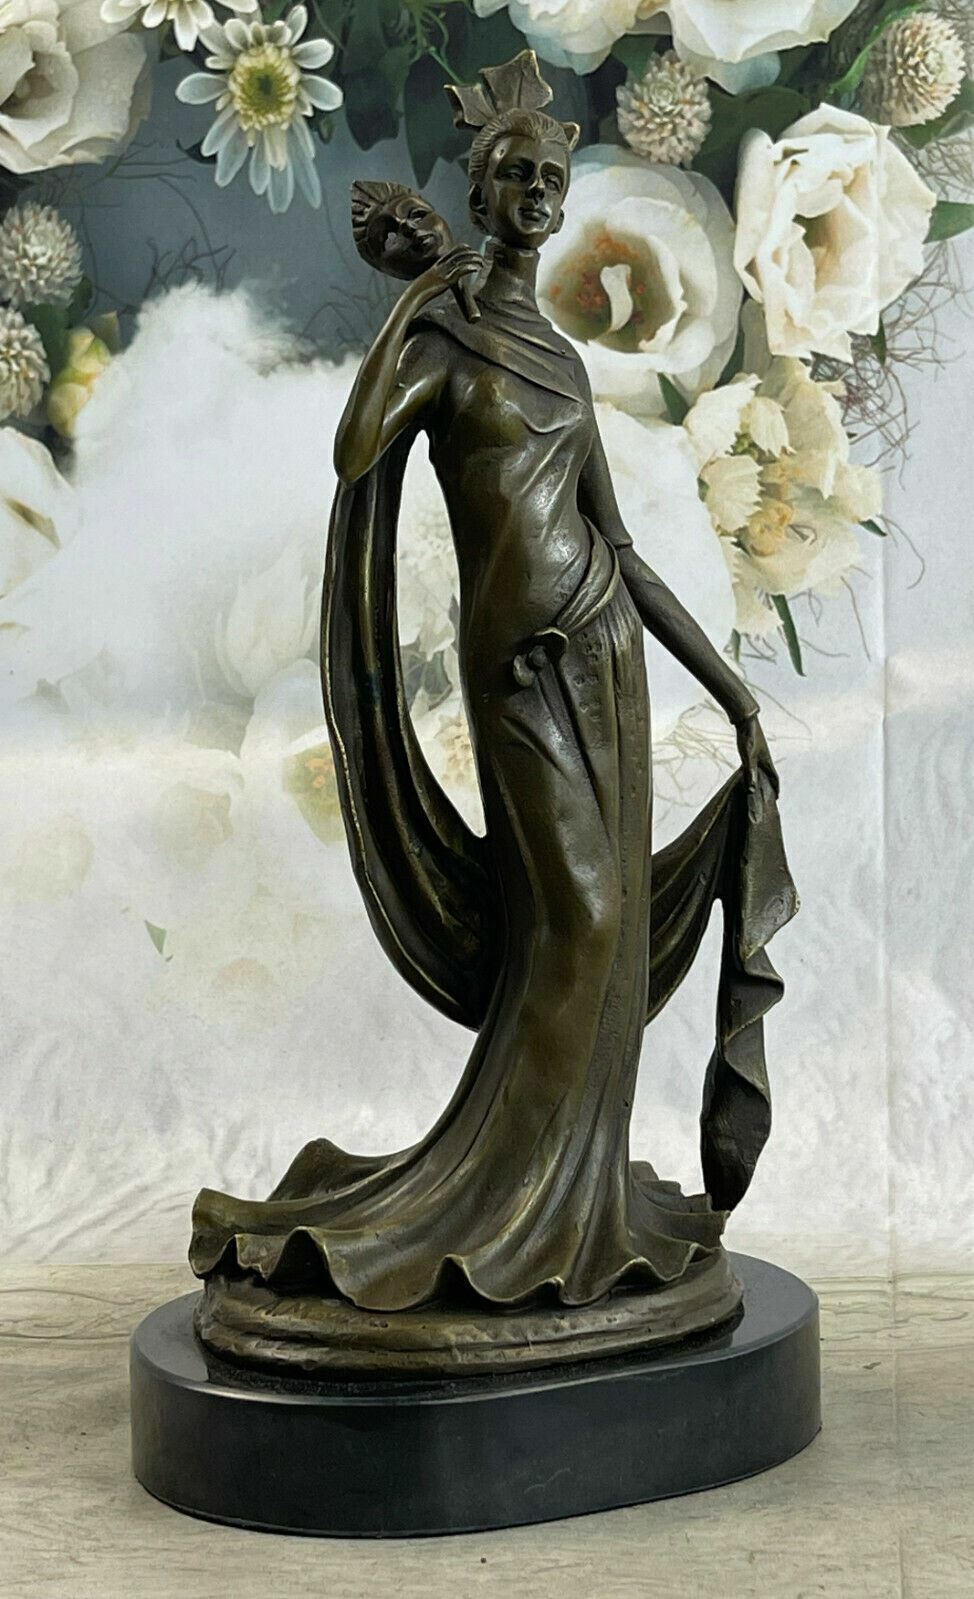 Handcrafted Art Deco High Fashion Classy Bronze Sculpture Figurine Sale Artwork